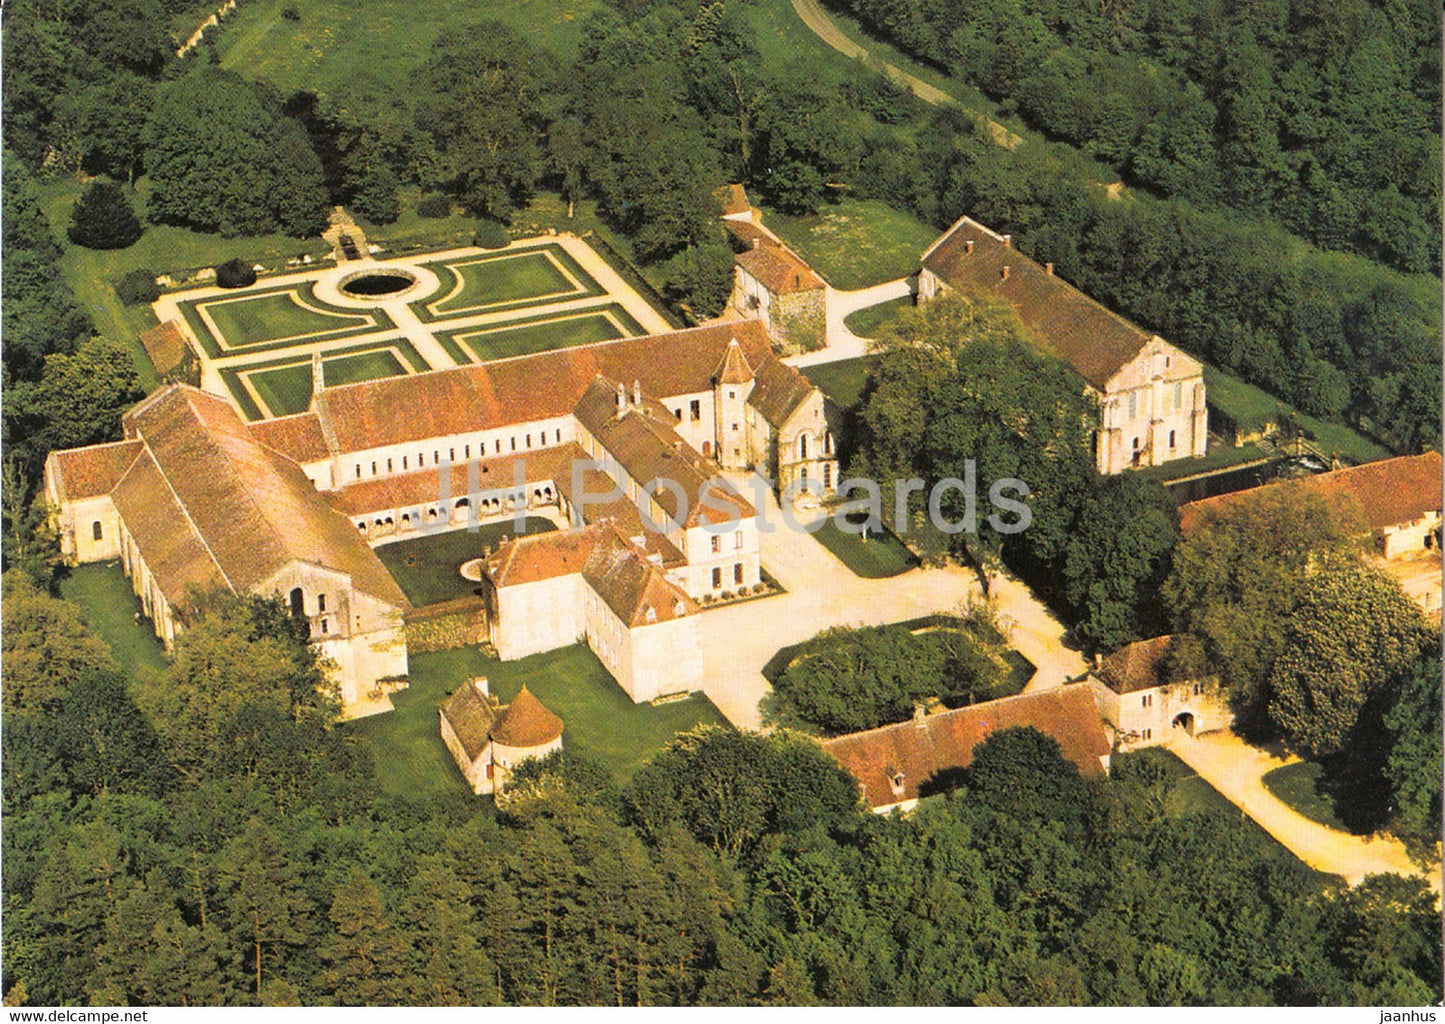 Abbaye de Fontenay - Abbaye Cistercienne fondee par Saint Bernard - Vue Aerienne - 12489 - France - unused - JH Postcards